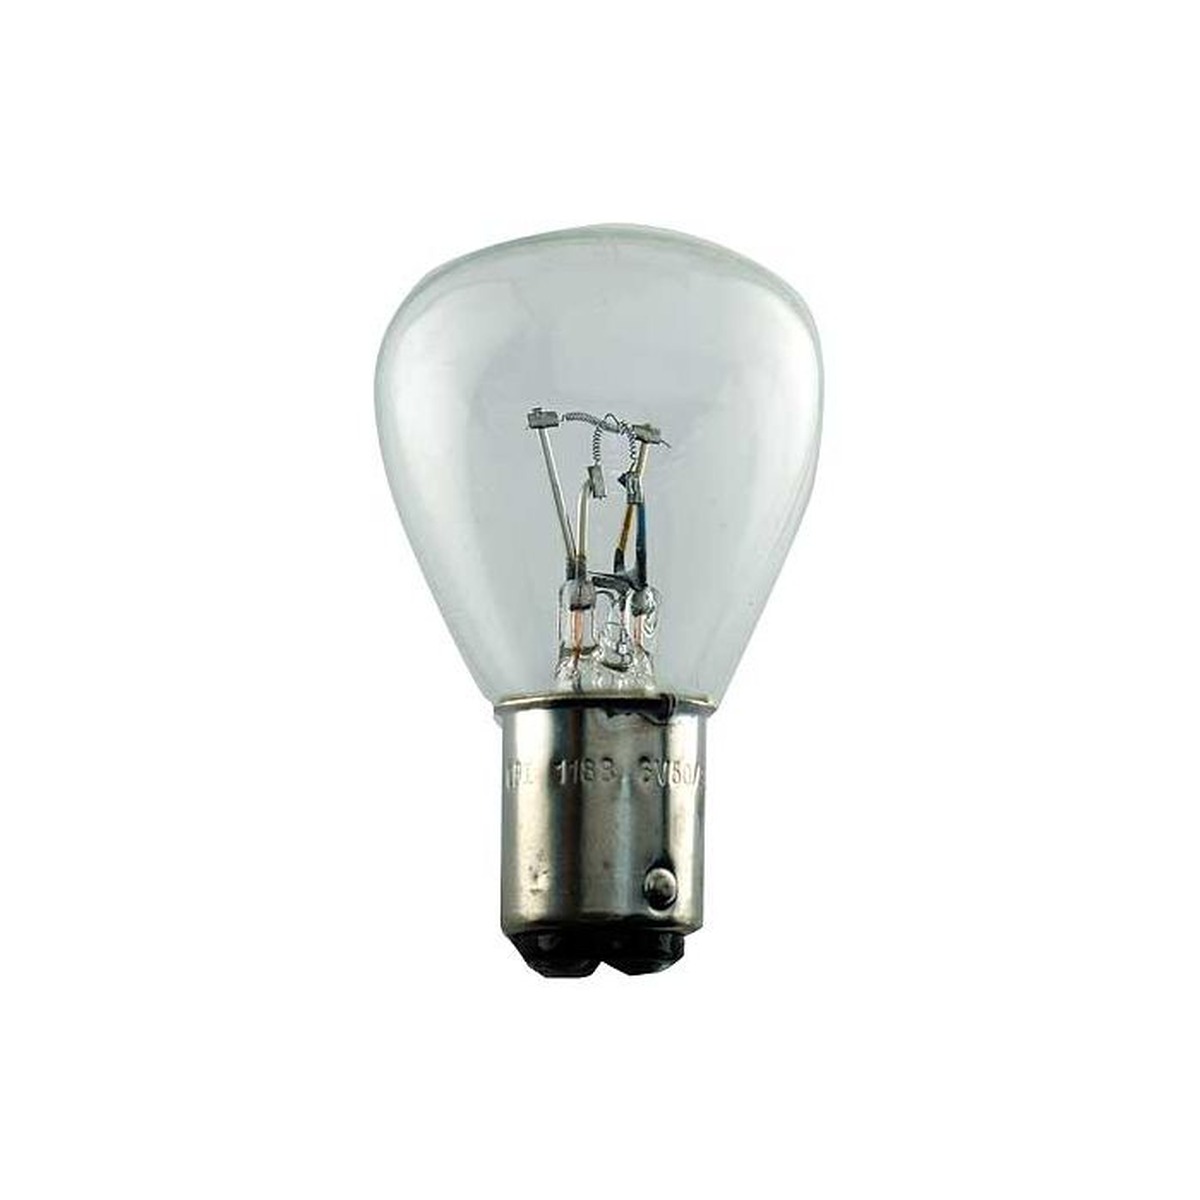 Head Lights, Bulbs & Visors - Bulb 6V double contact - 1928-34 pas & com